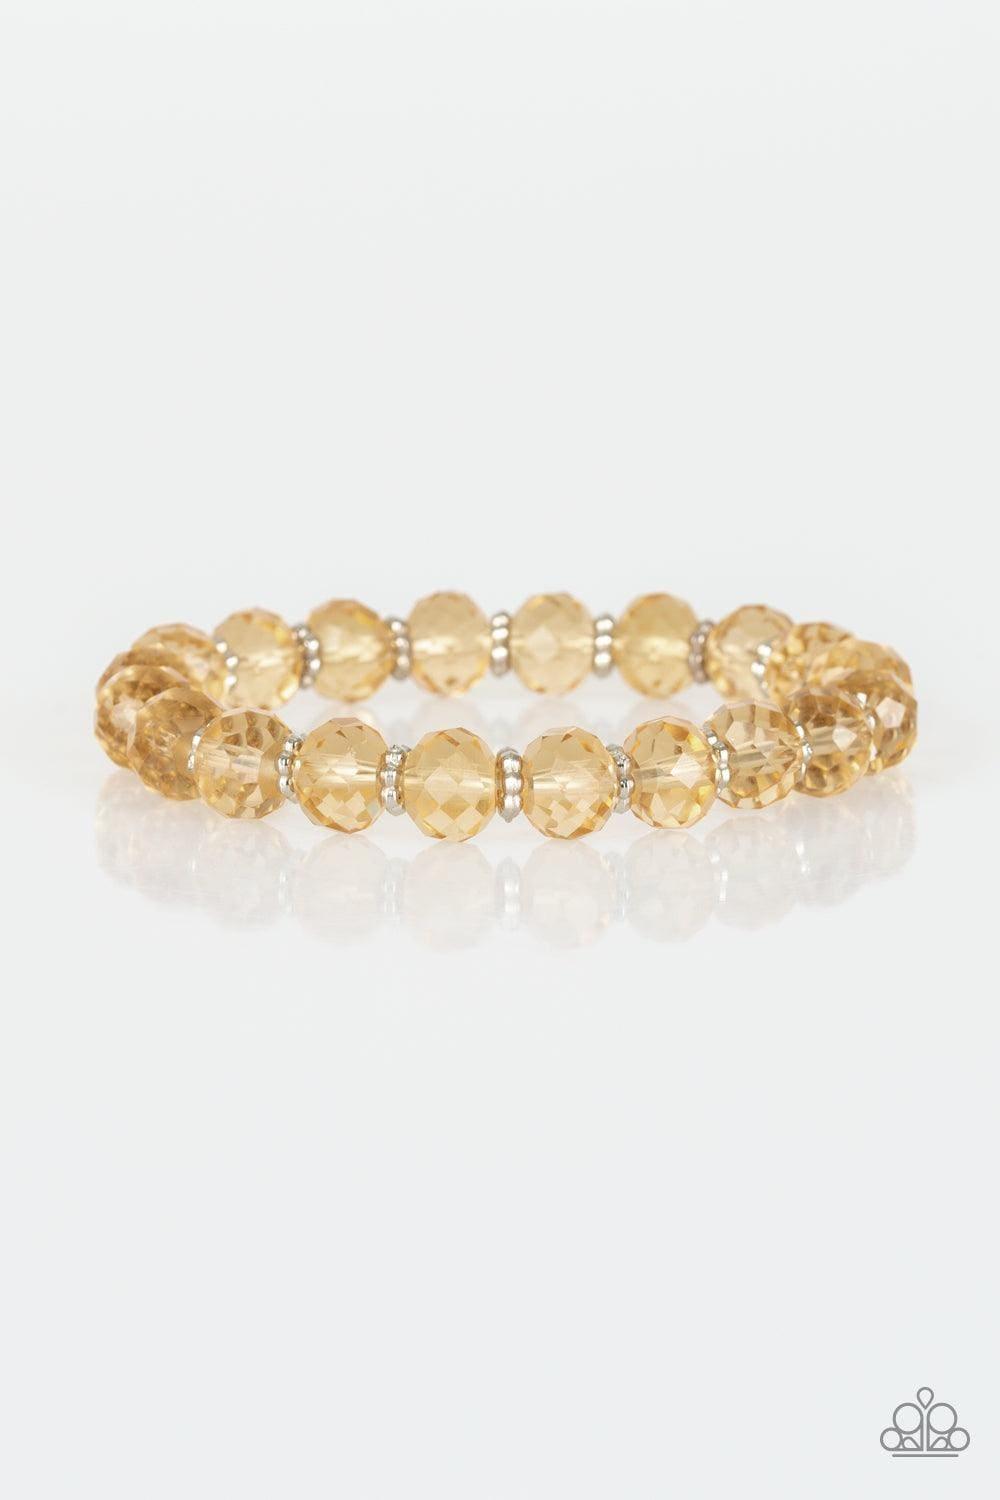 Paparazzi Accessories - Crystal Candelabras - Gold Bracelet - Bling by JessieK